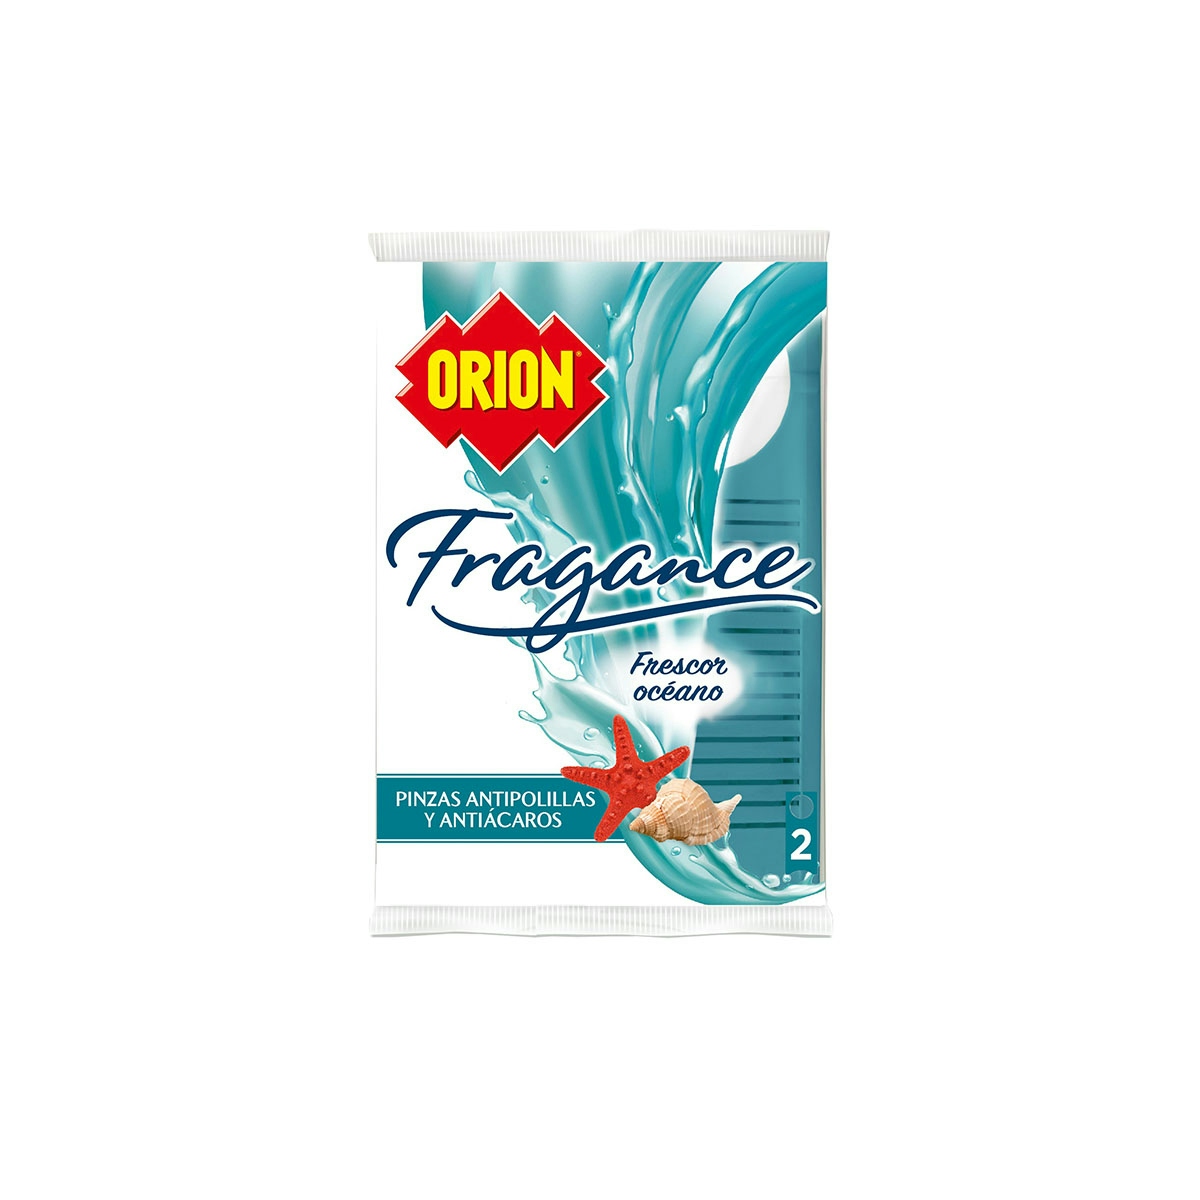 Pinza Fragance Ocean Orion 2 Ud